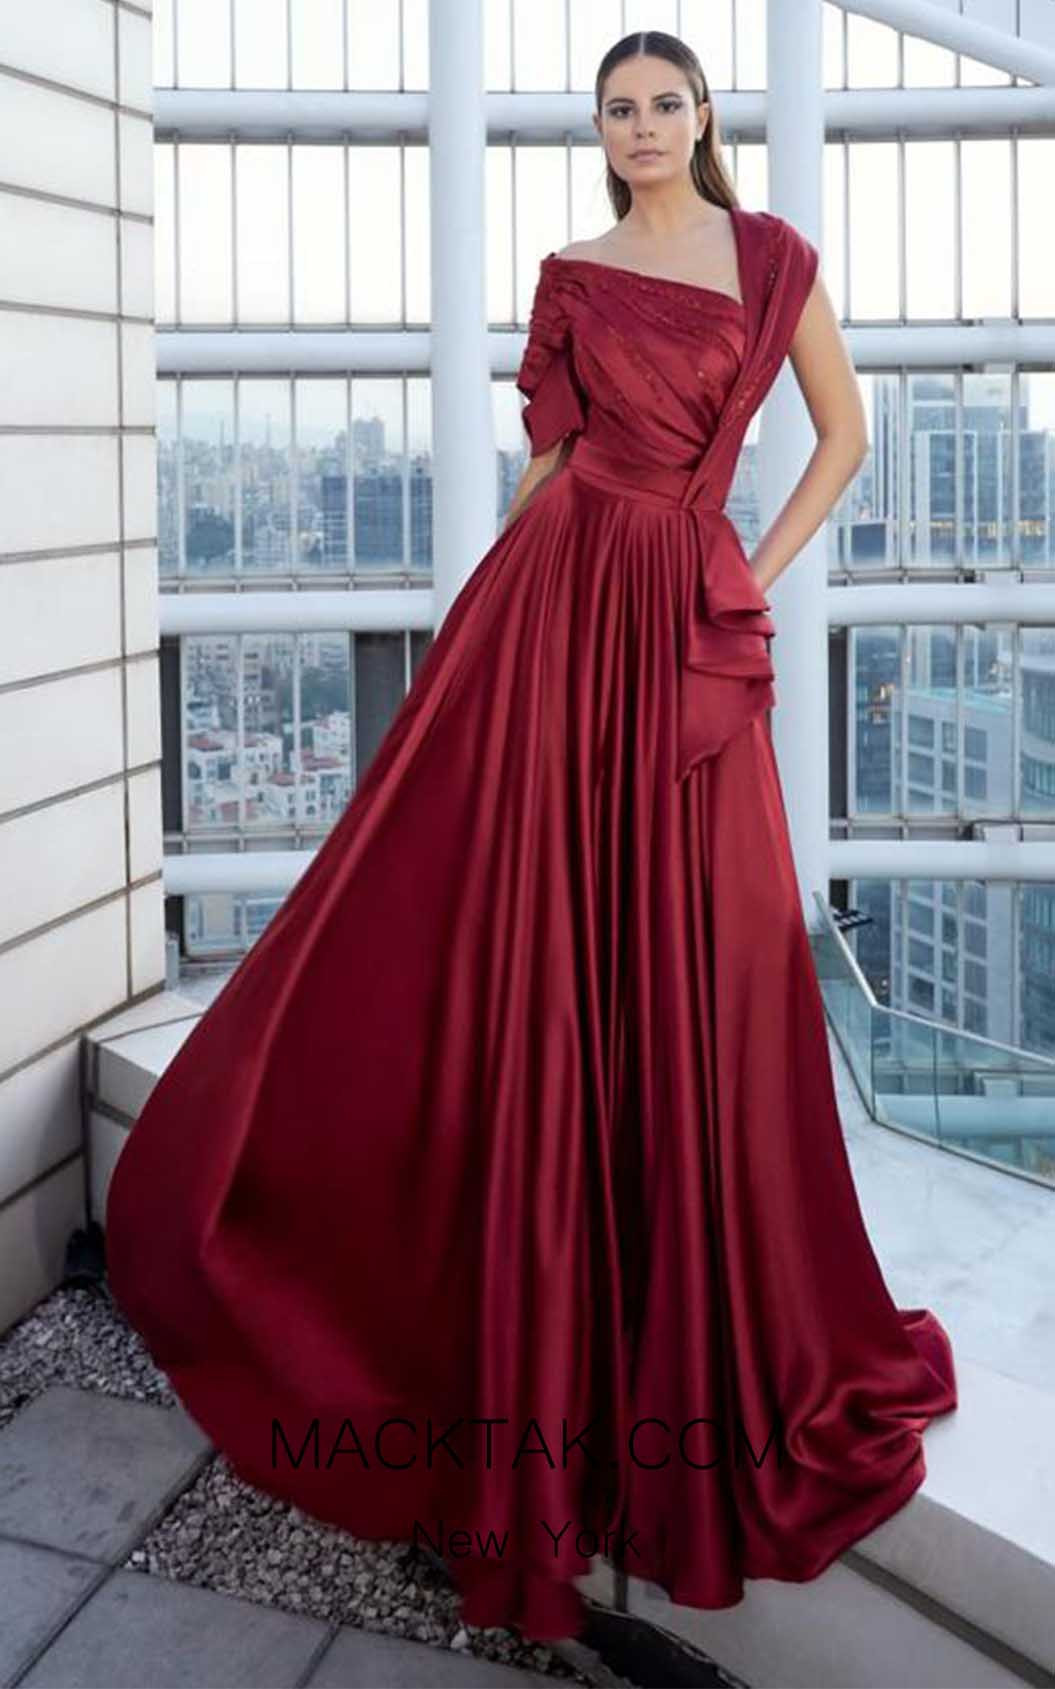 MackTak Couture 059 Dress